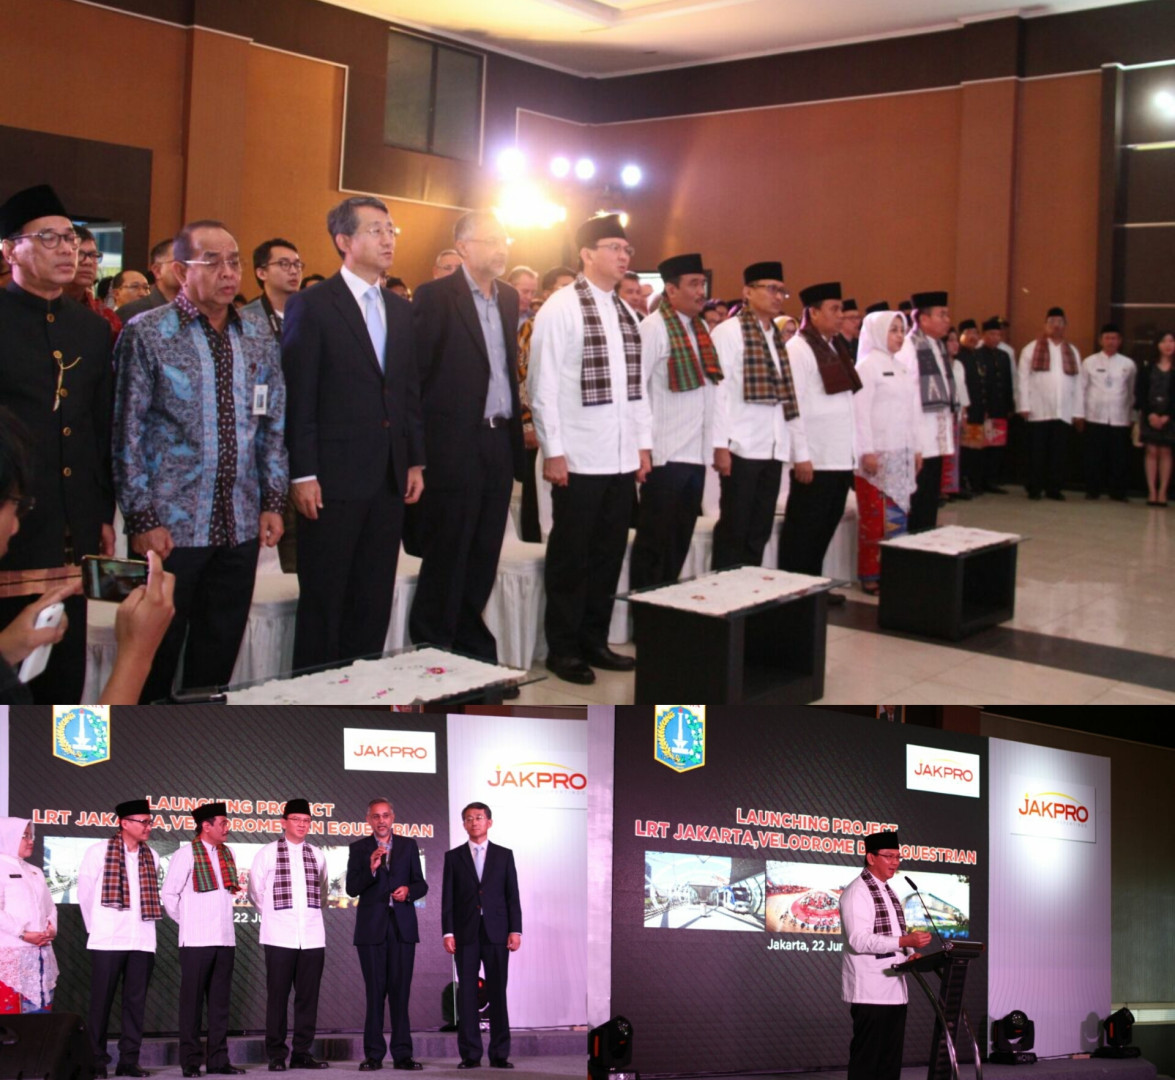 WIKA Builds LRT Corridor 1 Phase 1 Jakarta and World Class Velodrome Image